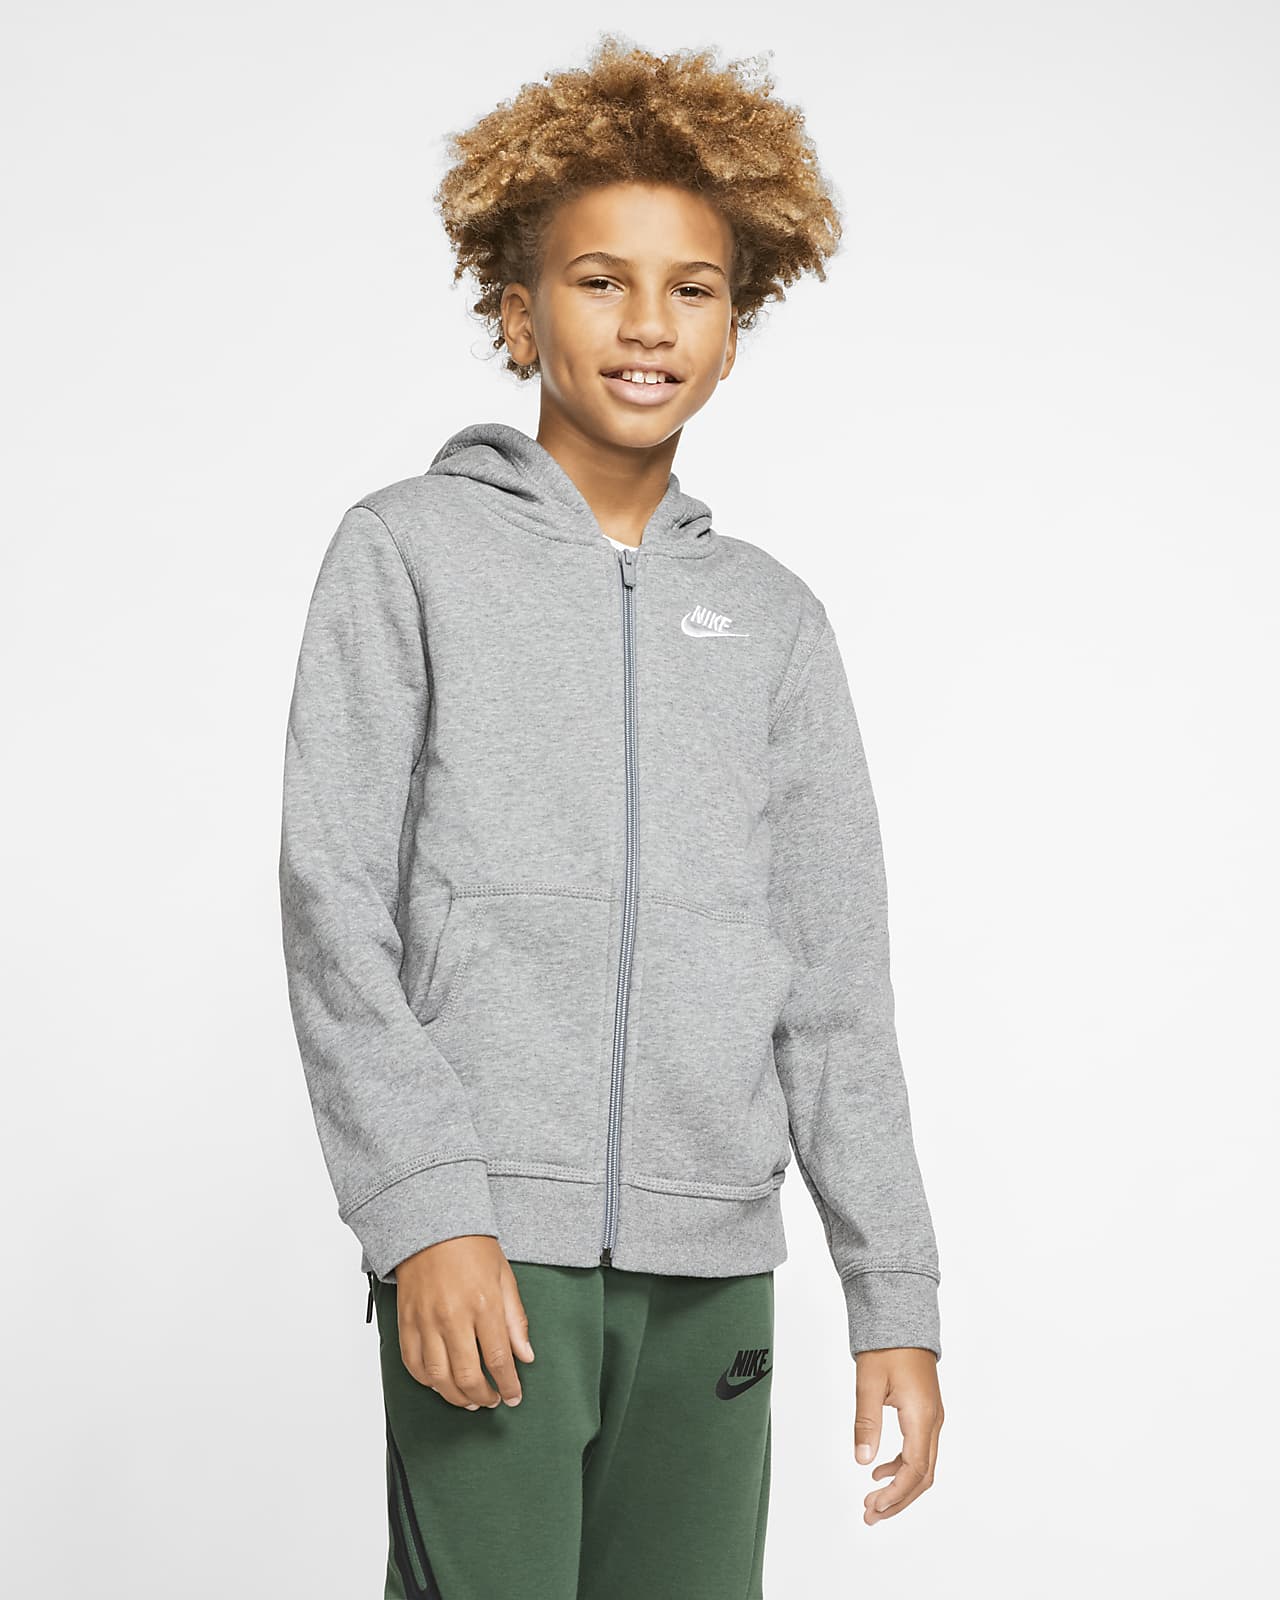 Nike Sportswear Club Dessuadora amb caputxa i cremallera completa - Nen/a